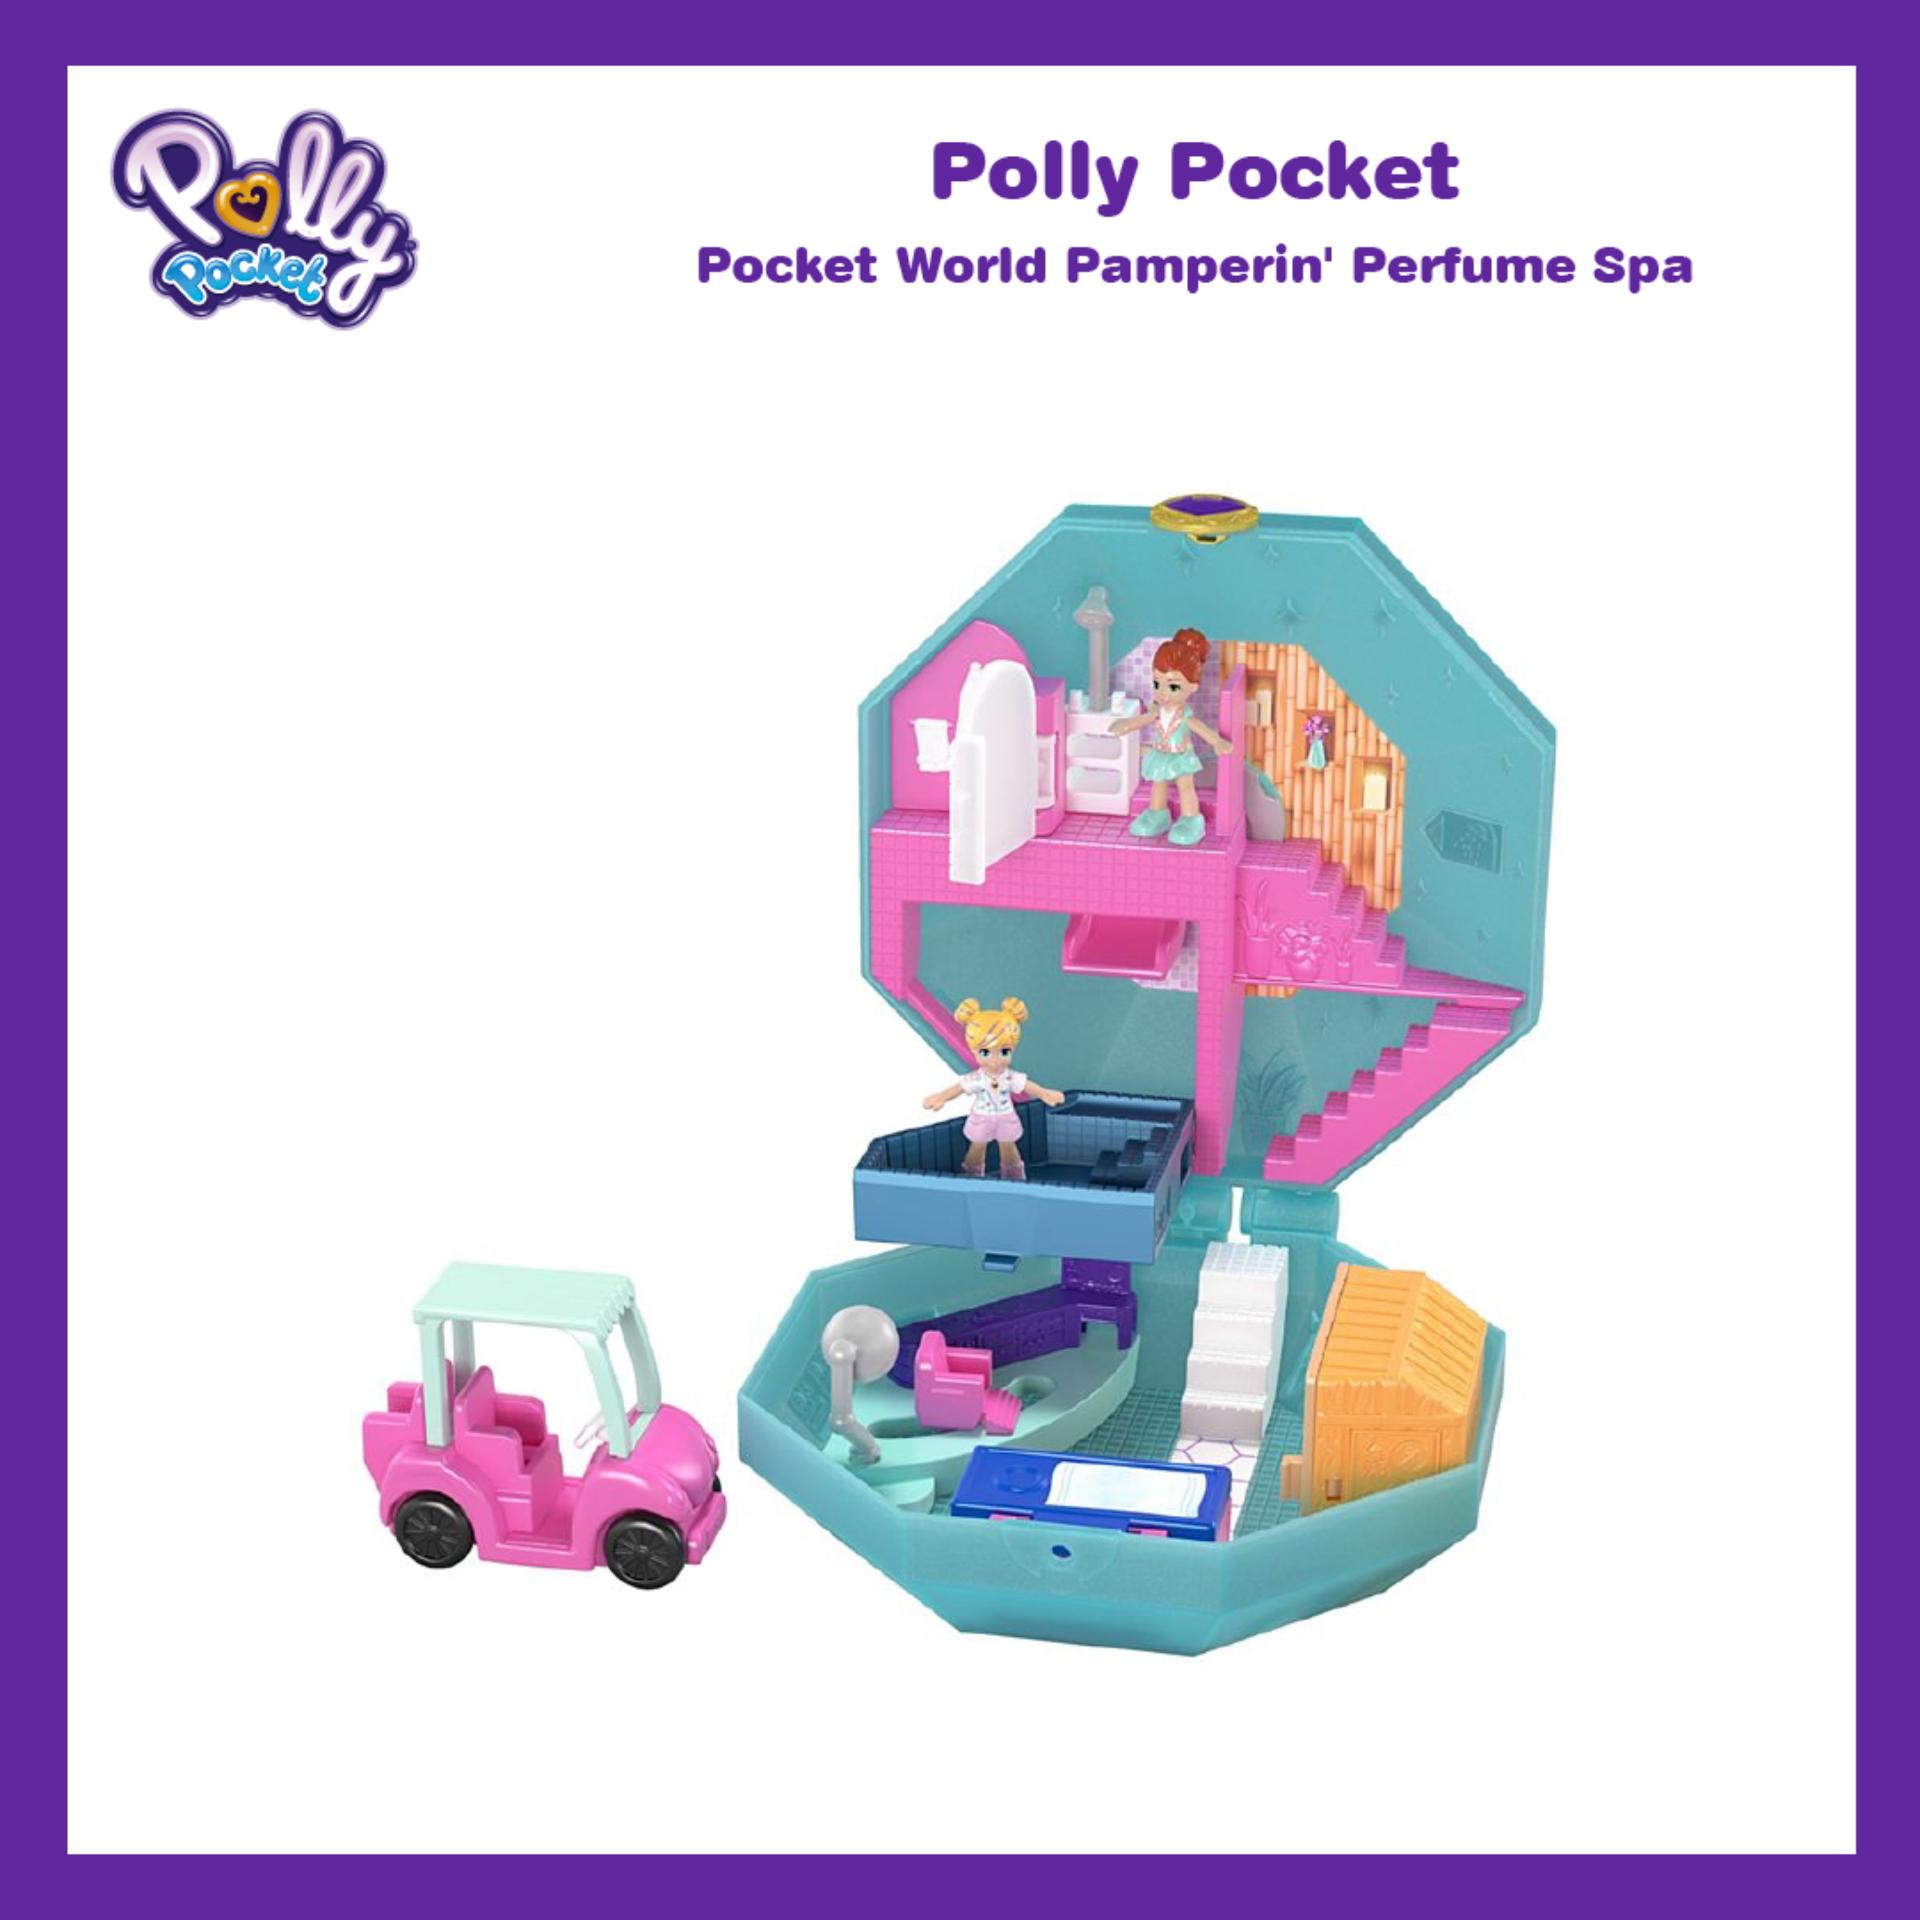 Polly Pocket™ Pocket World Pamperin' Perfume Spa ตุ๊กตา พอลลี่ พ็อคเก็ต เวิลด์ แพมเพอริ่ง เพอร์ฟูม สปา ของเล่นเด็ก